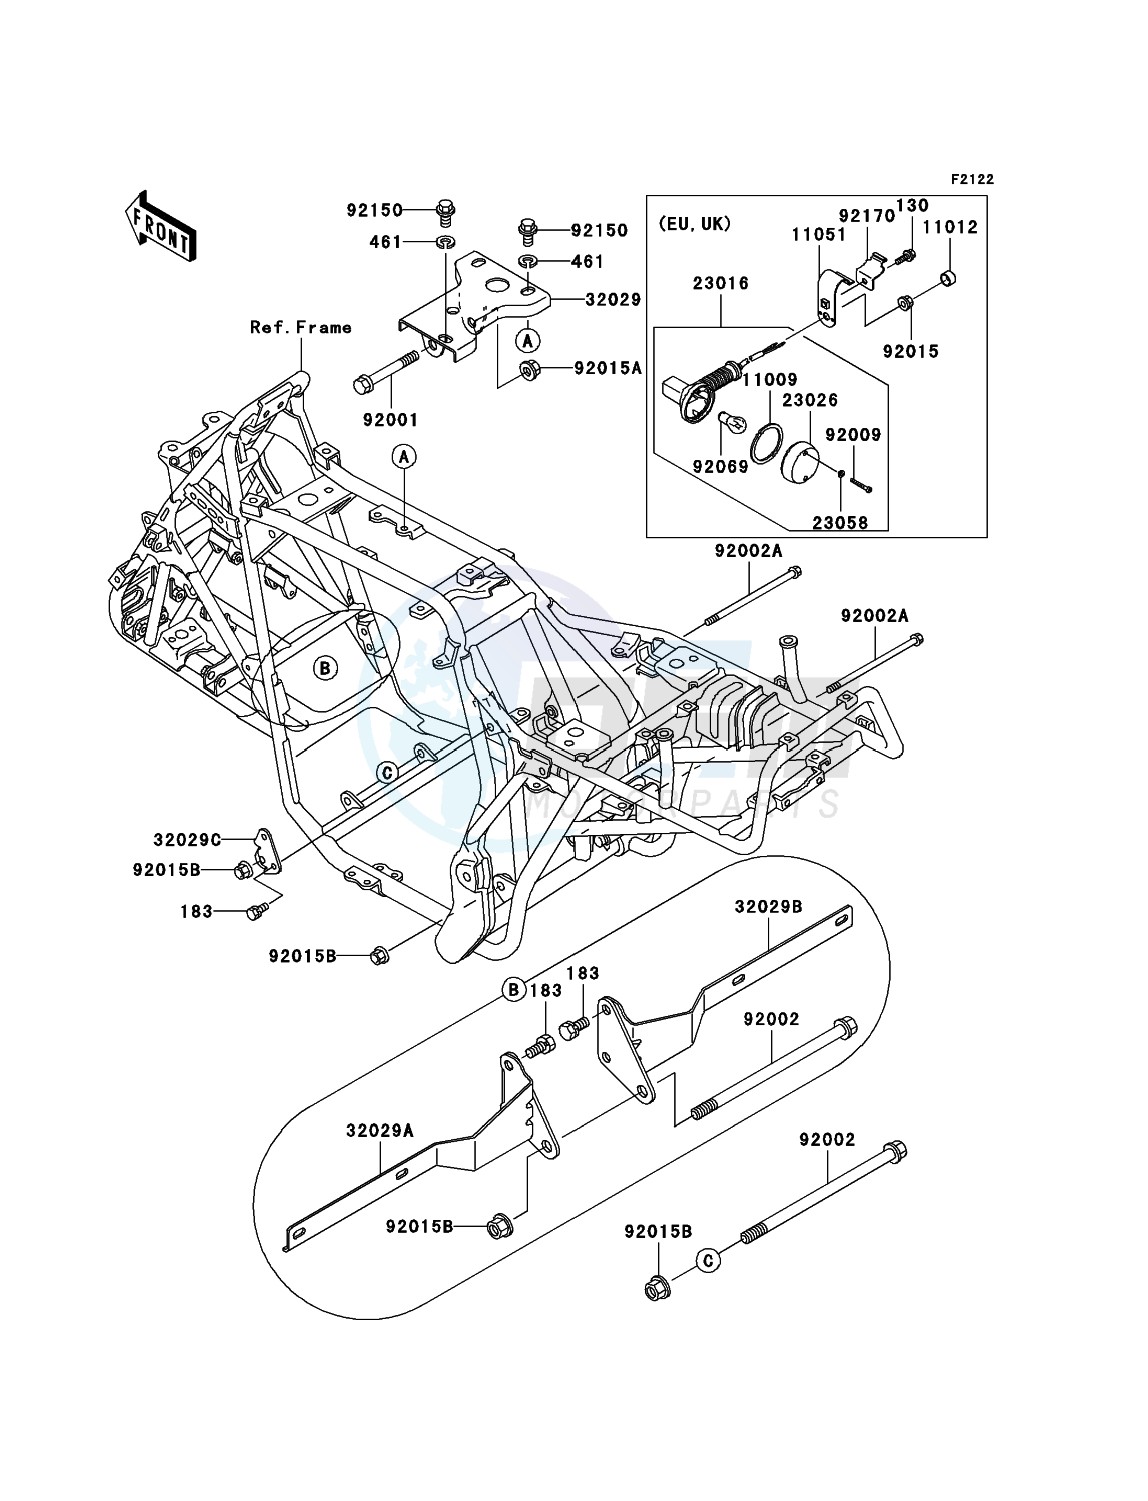 Engine Mount blueprint